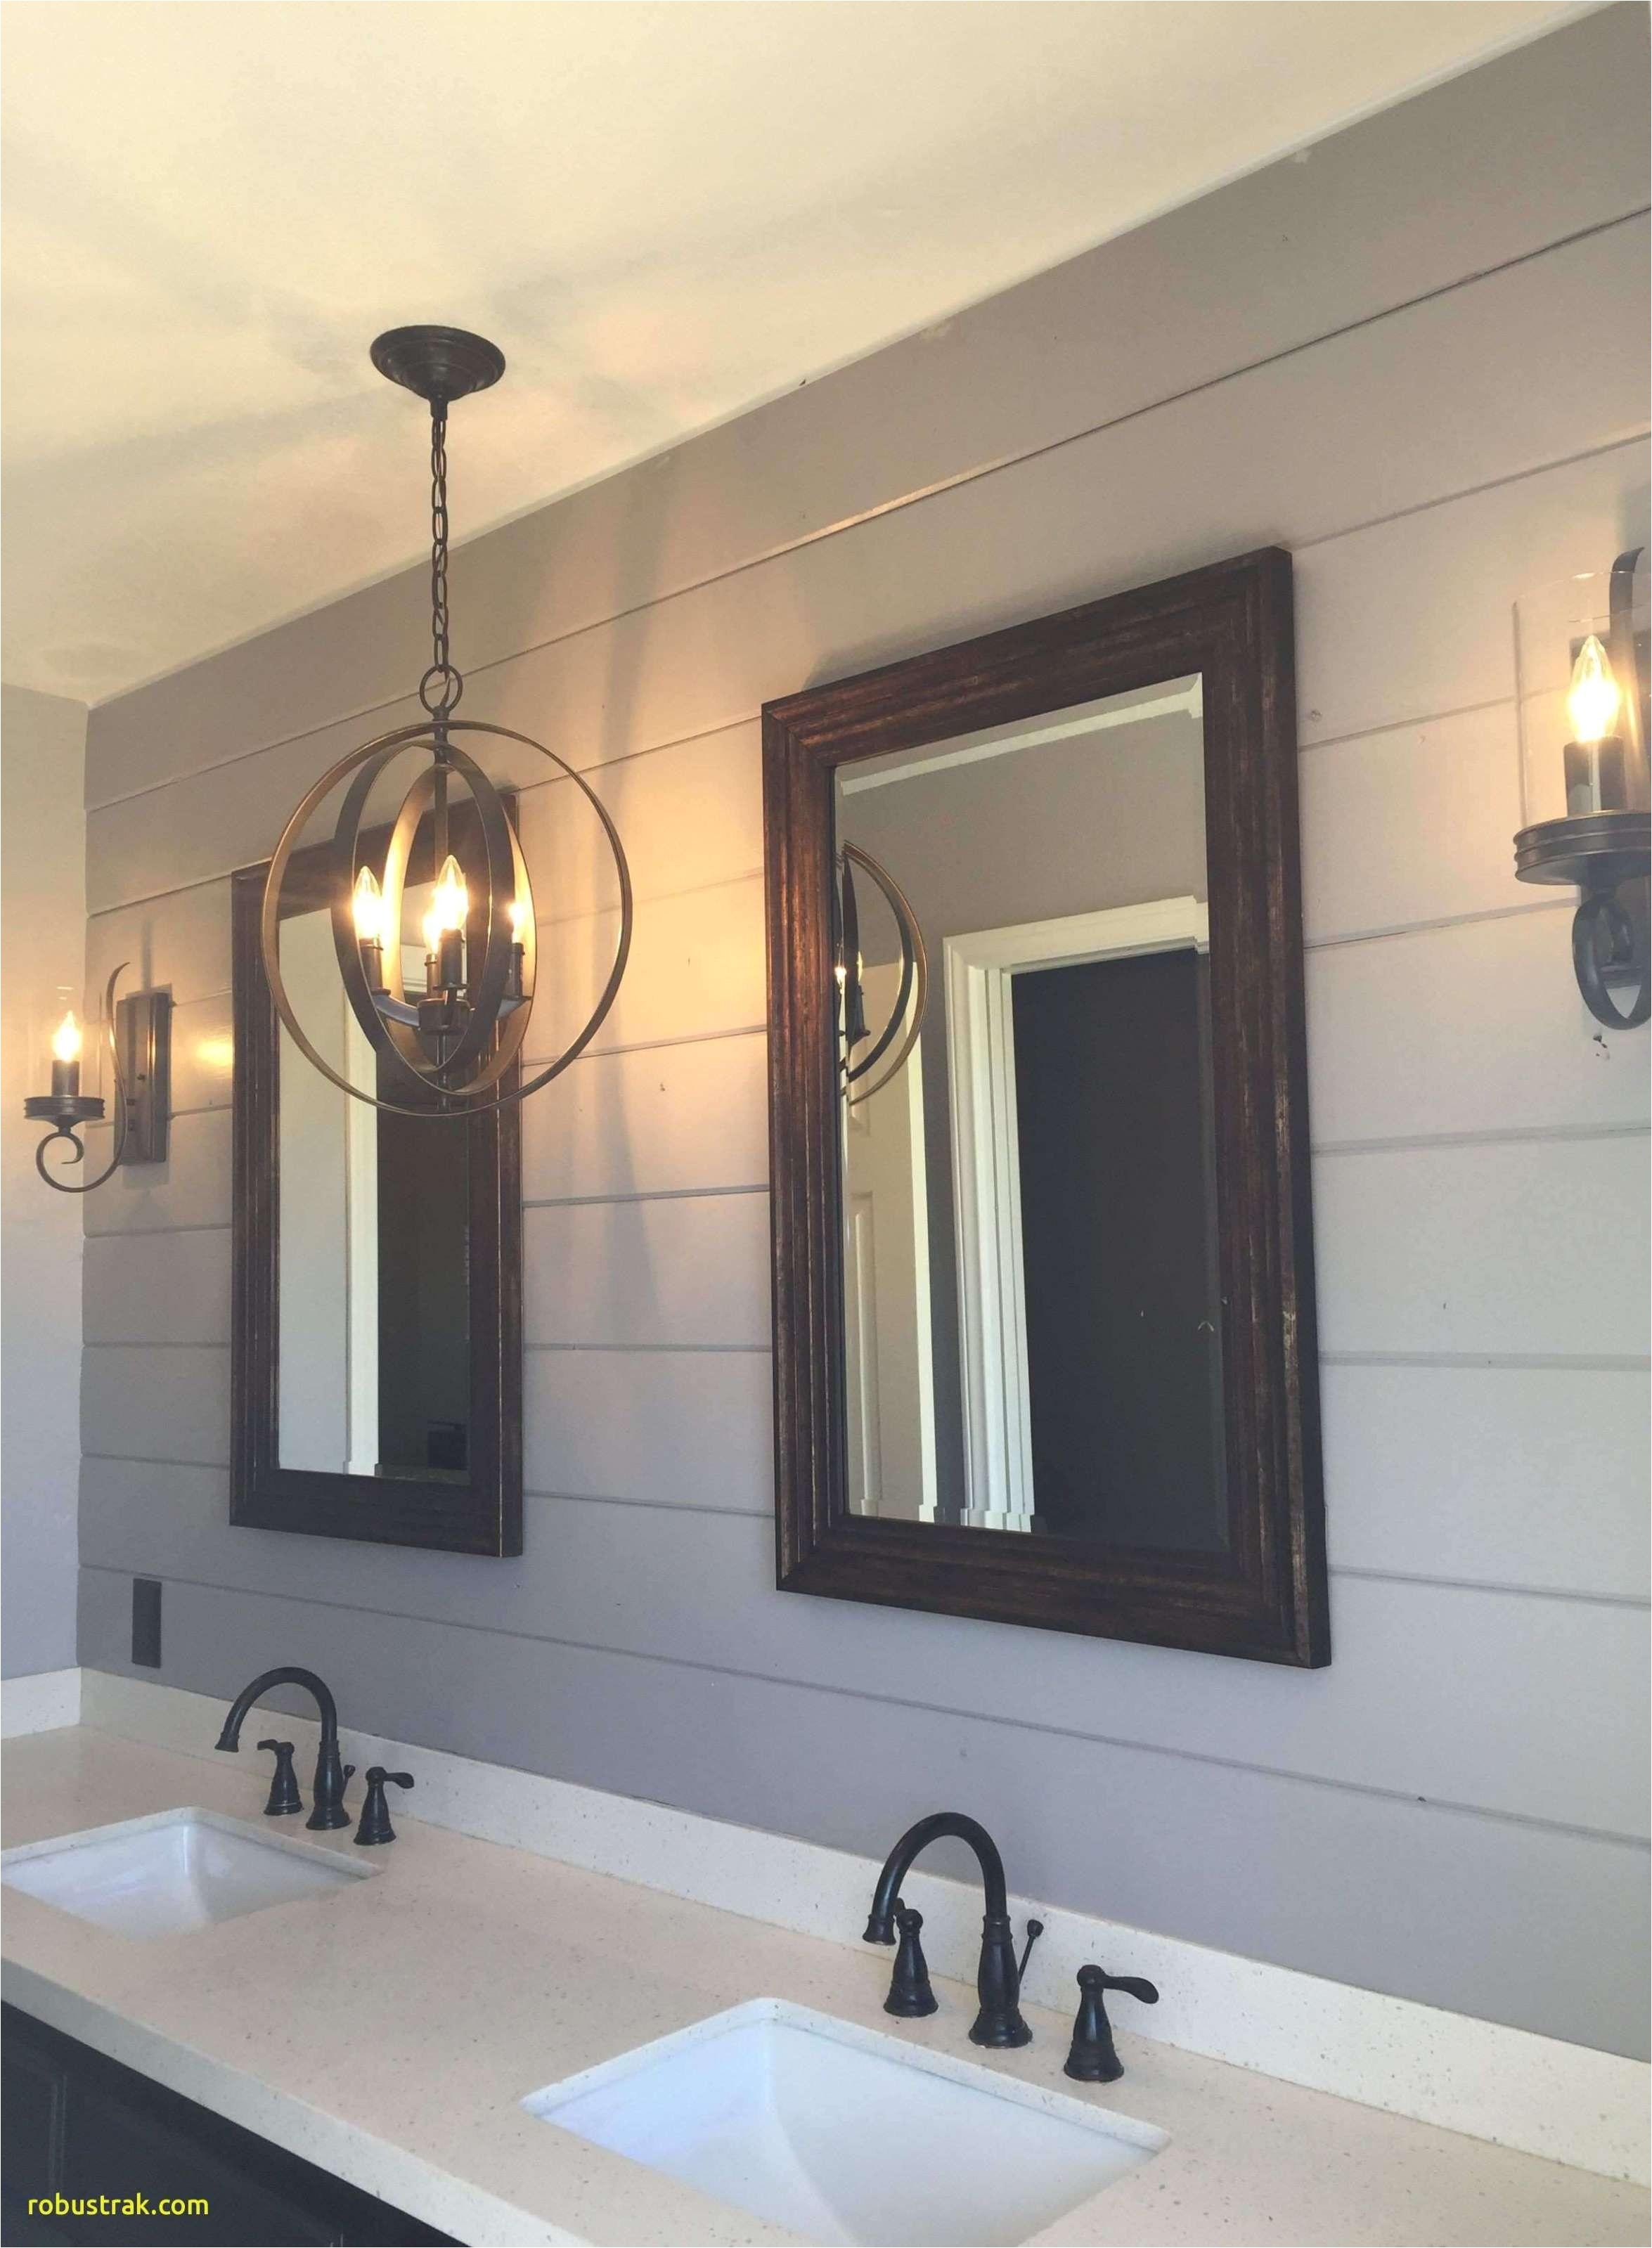 diy lighting ideas new 34 new light fixtures for bathroom ceiling douglaschannelenergy